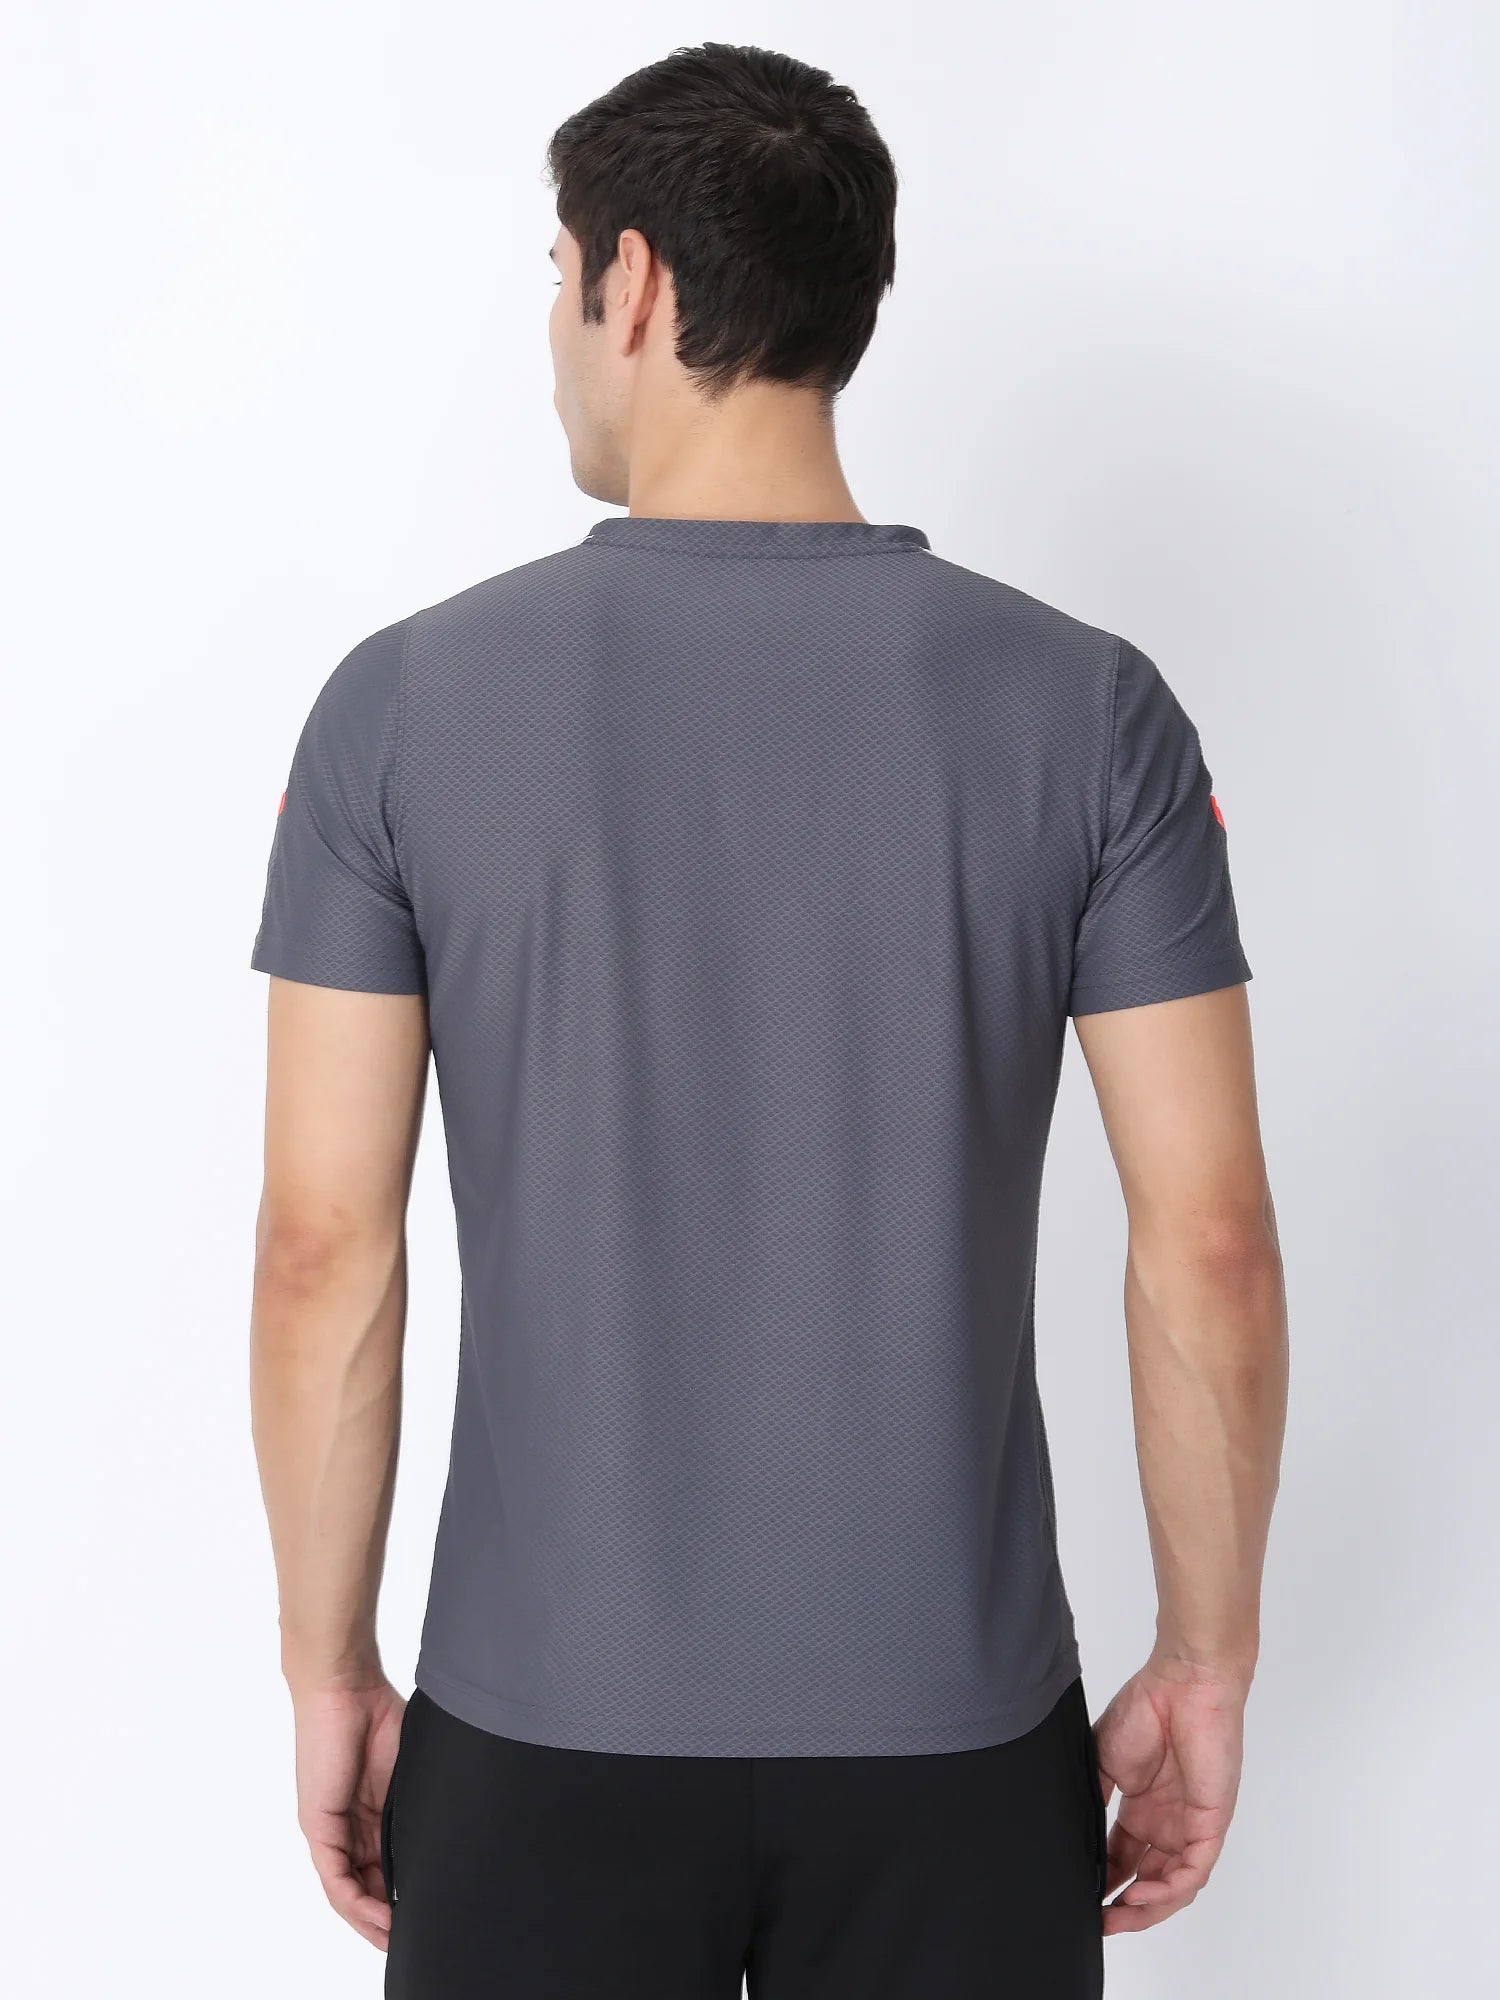 Jeffa Endurance T-shirt in Grey